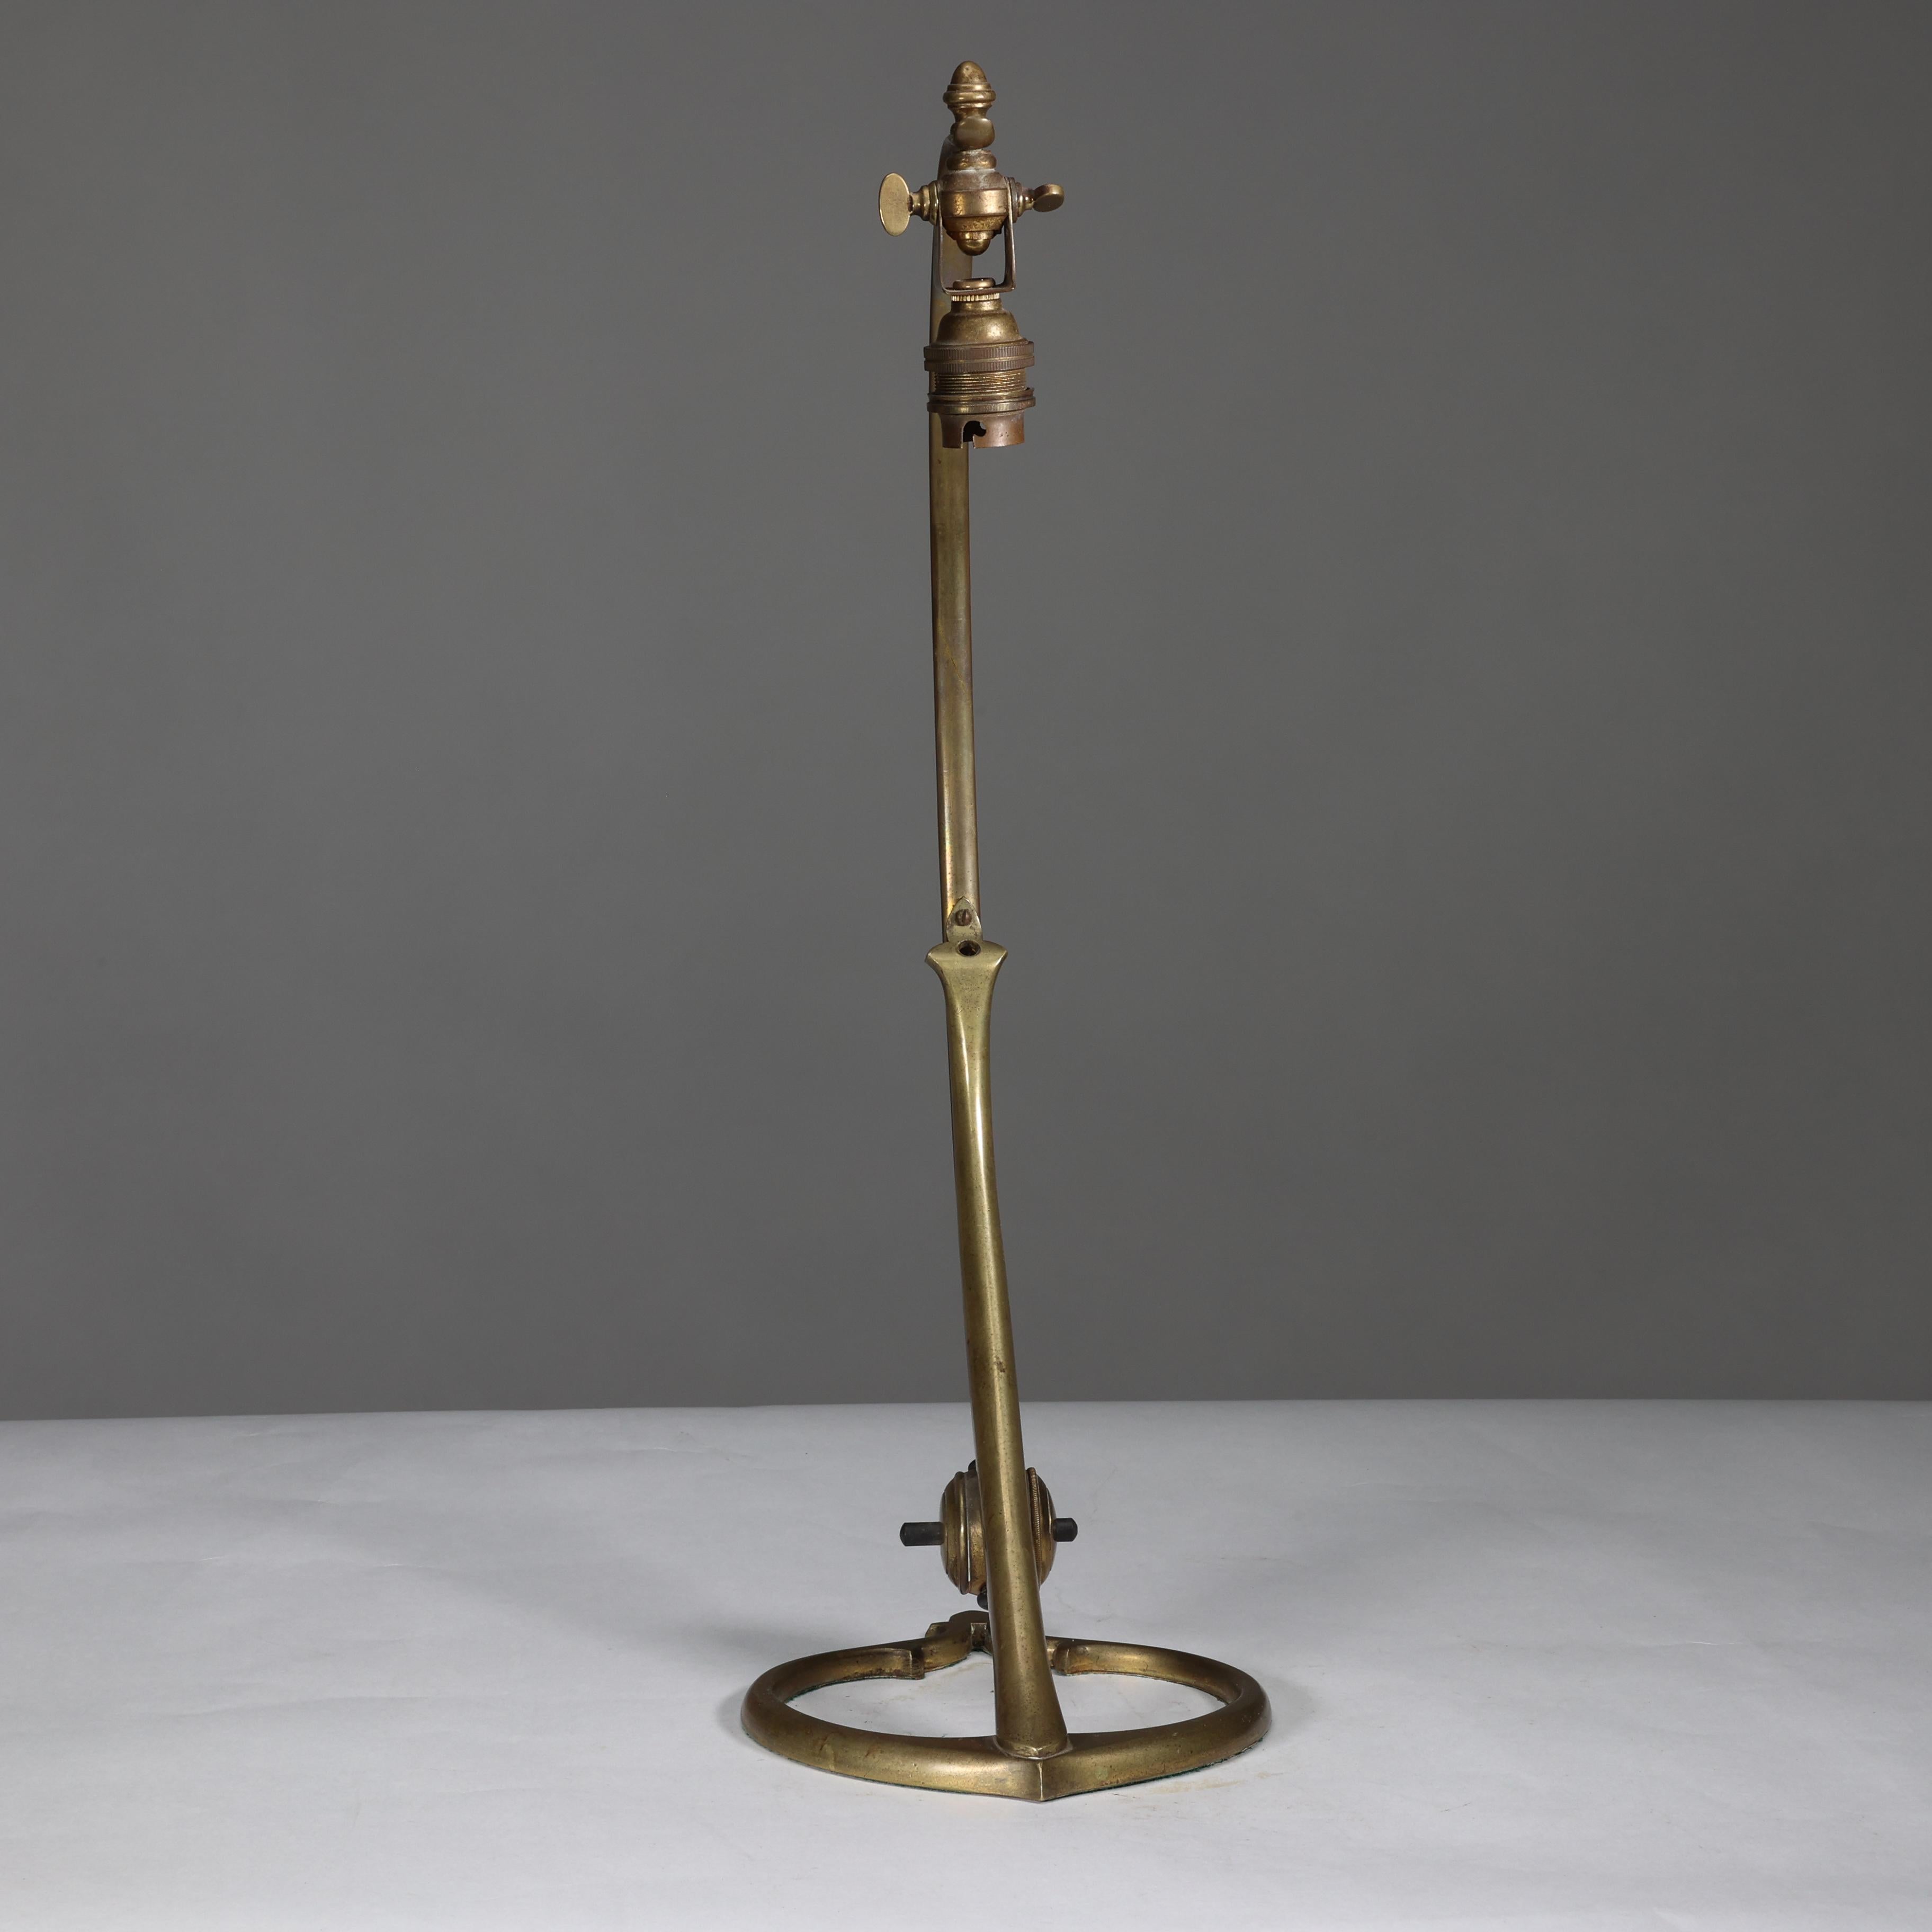 English William Arthur Smith Benson. An original pair of Brass Swan Table Lights.